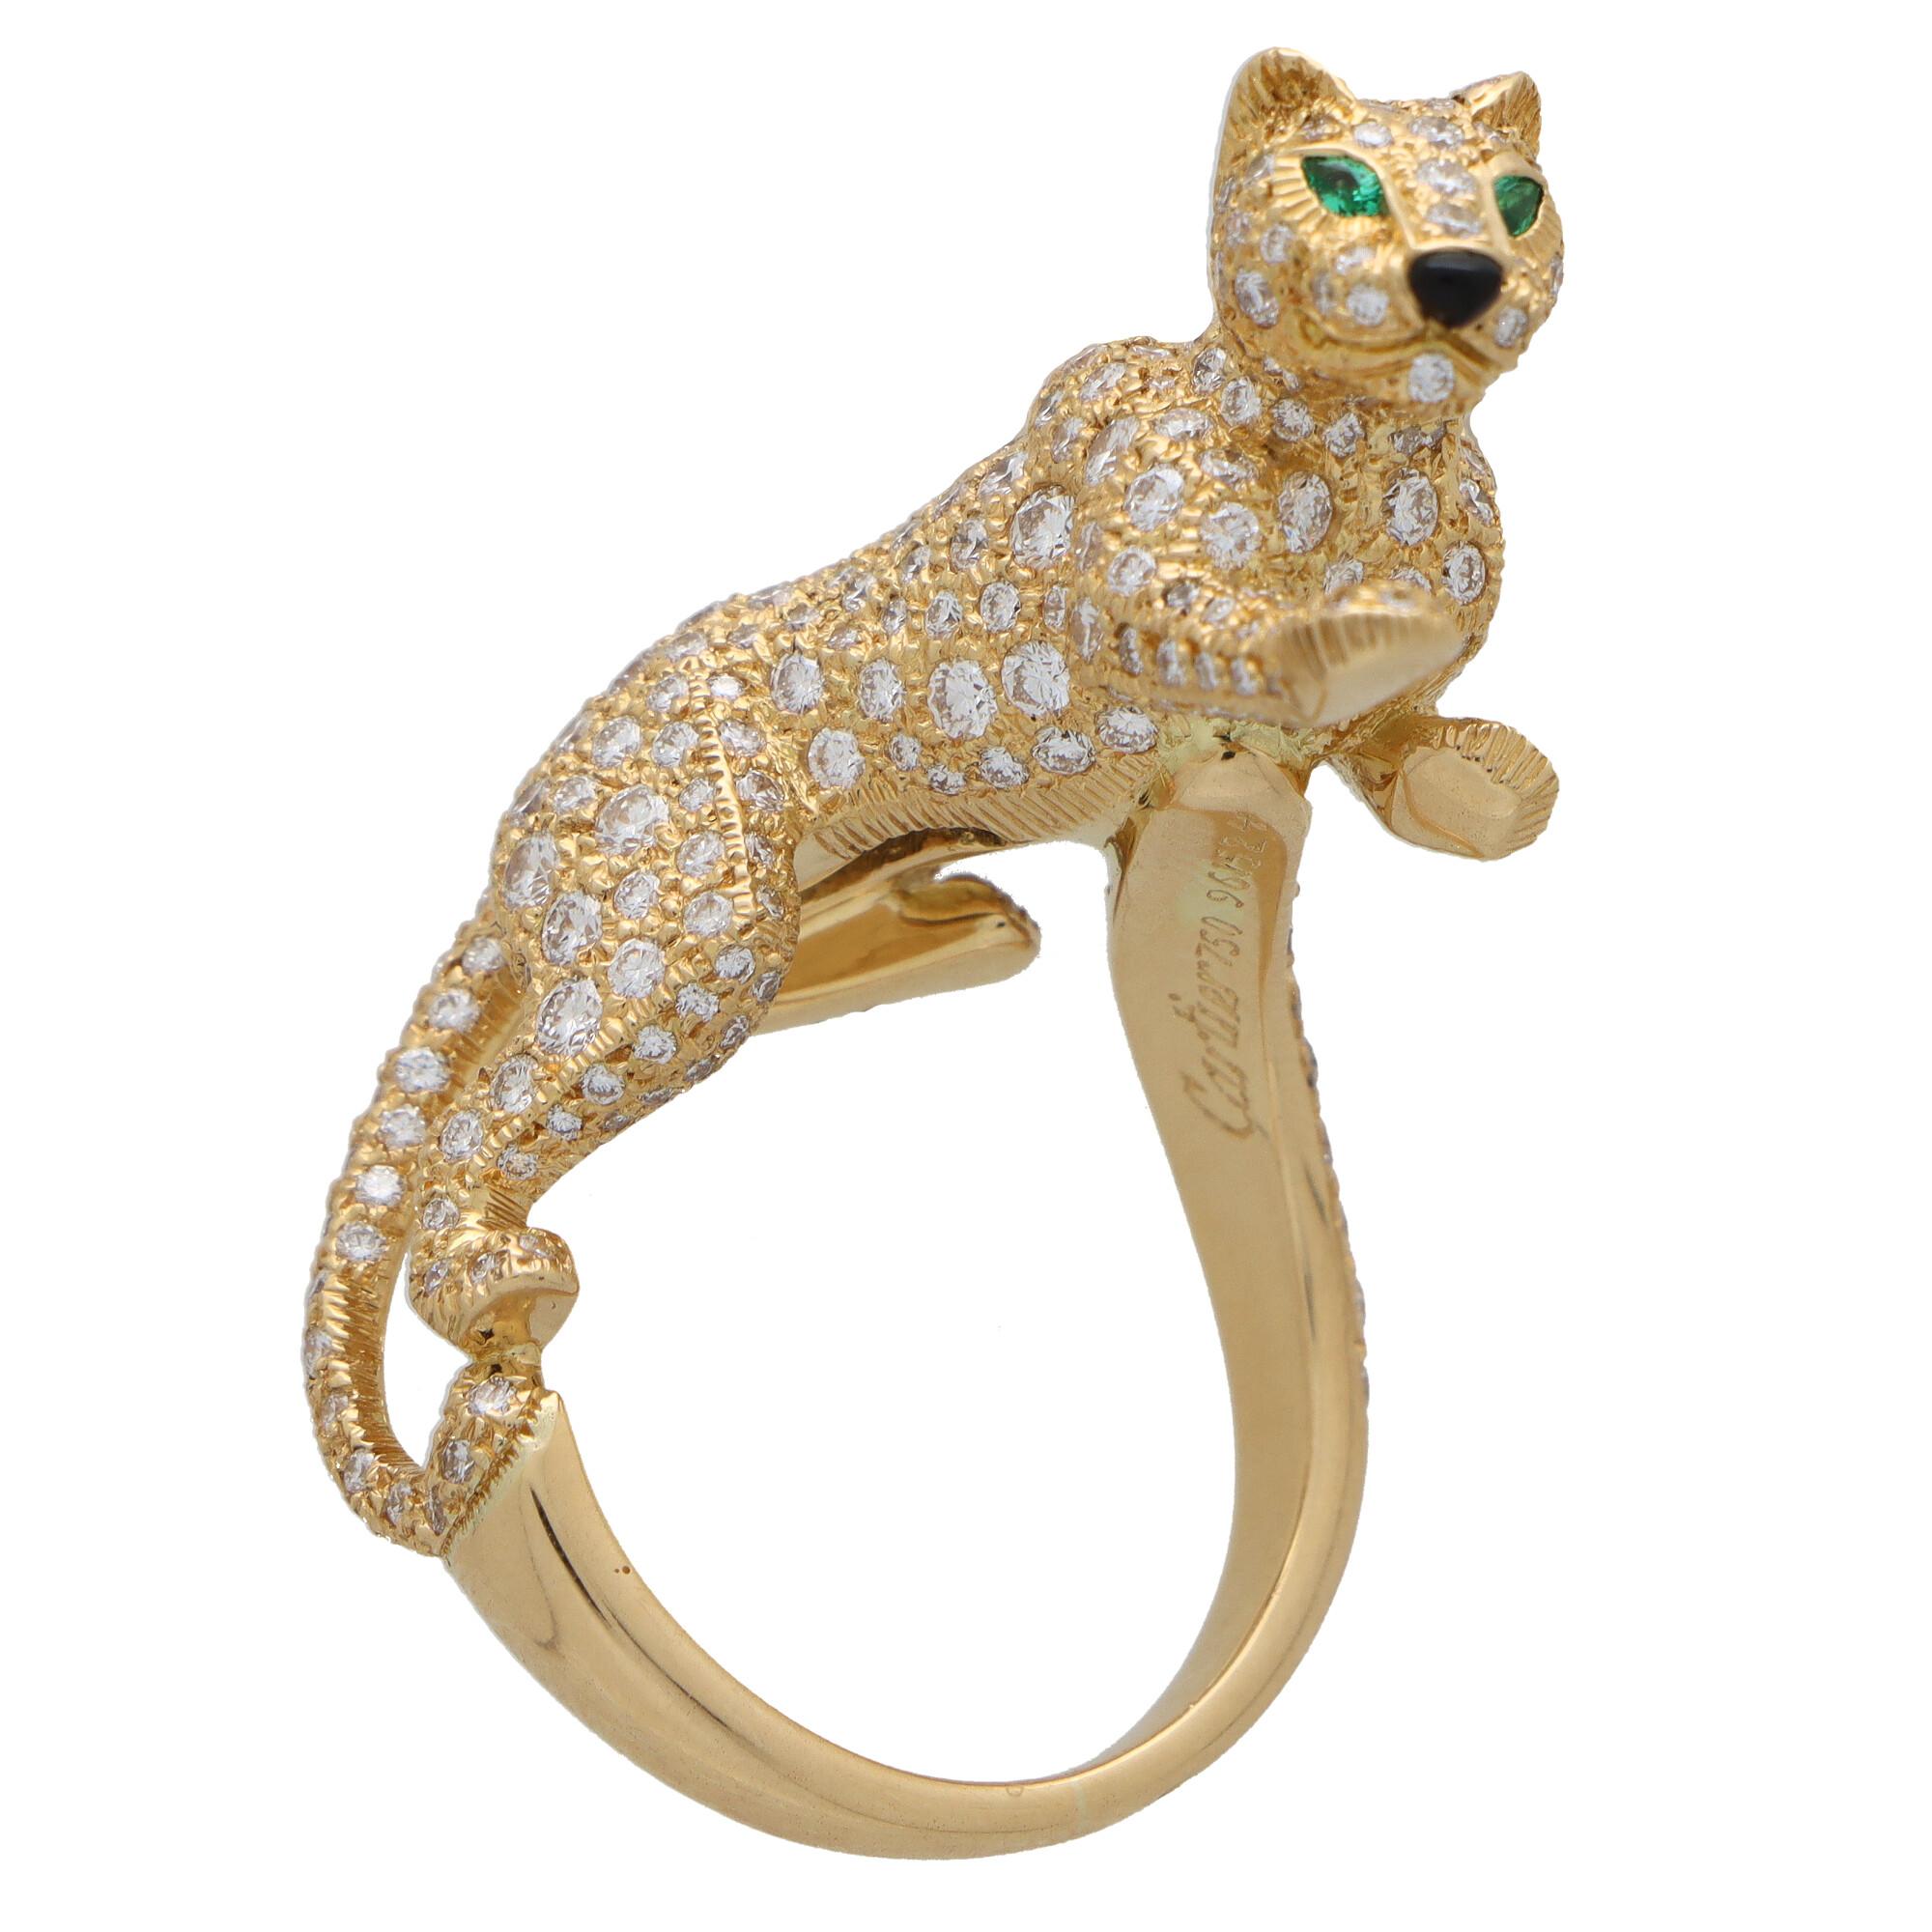 Round Cut Cartier Diamond and Green Garnet Walking Panther Ring Set in 18k Yellow Gold